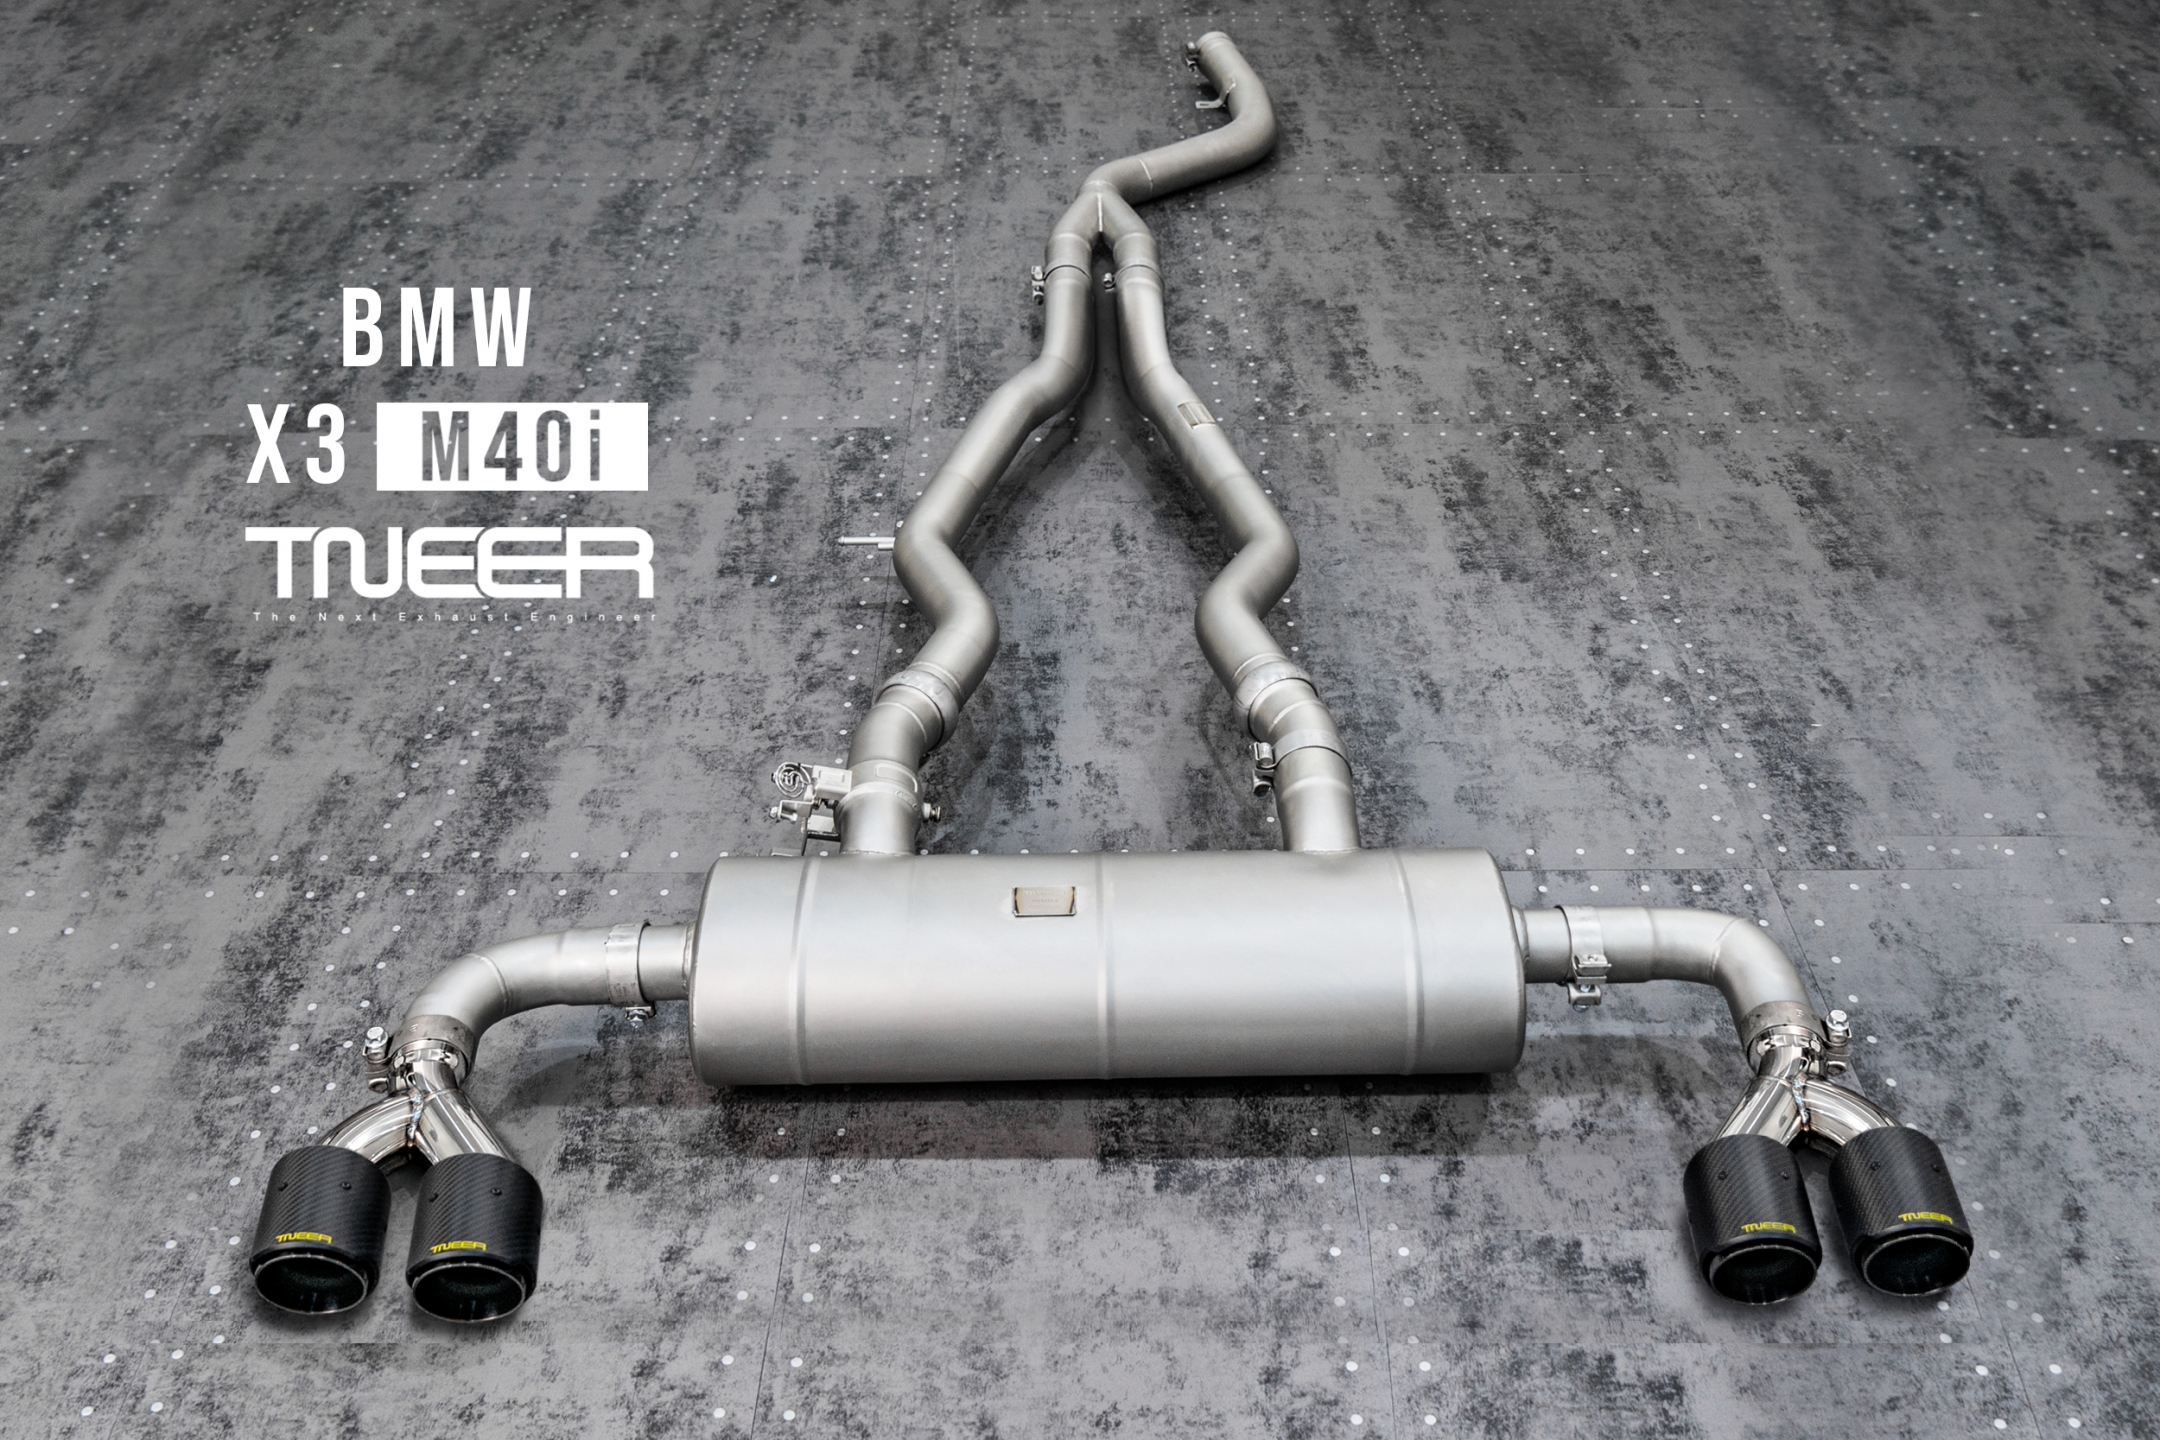 BMW 328i (N26) TNEER Exhaust System